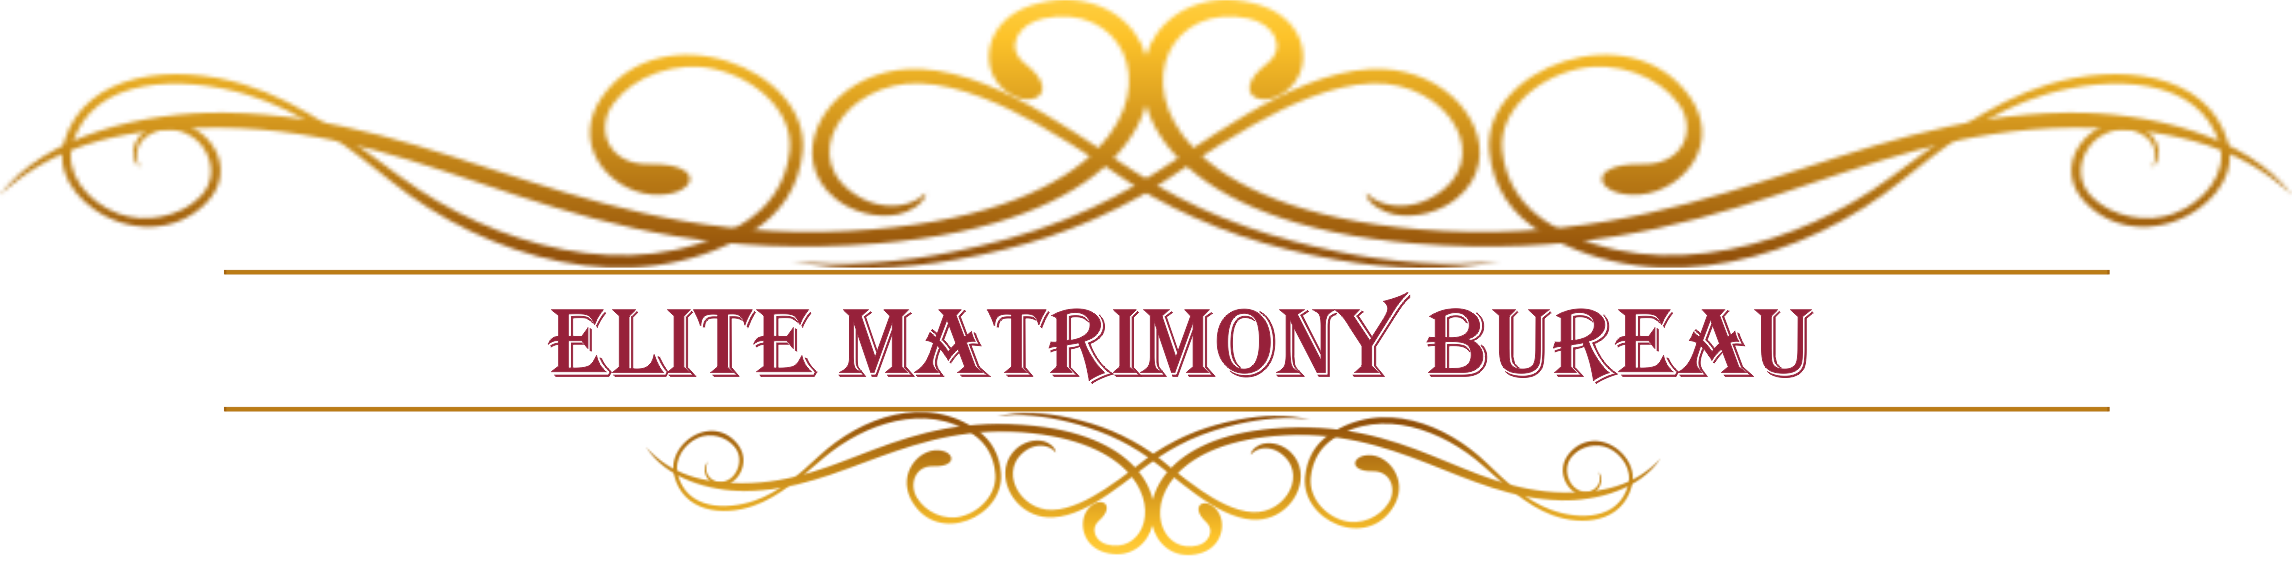 Elite Matrimony Bureau